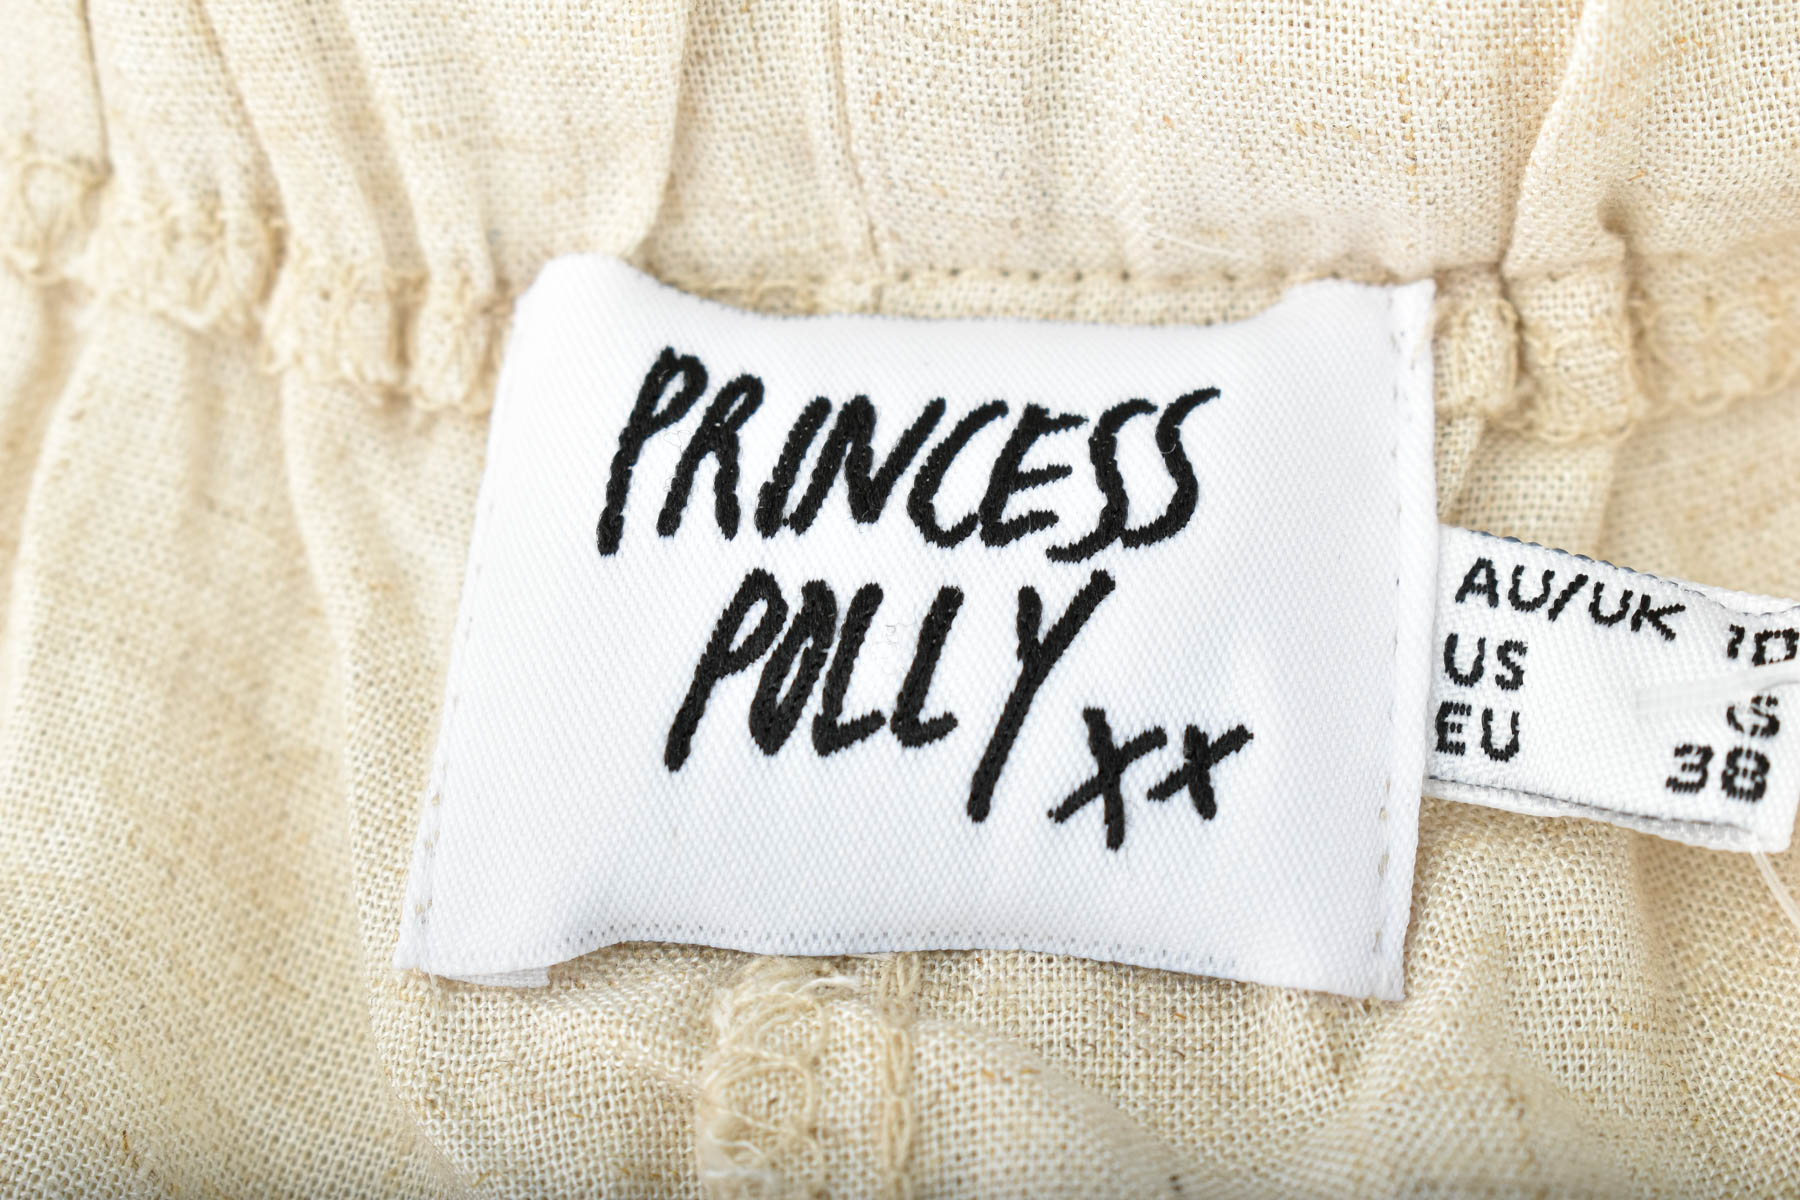 Female shorts - Princess Polly - 2